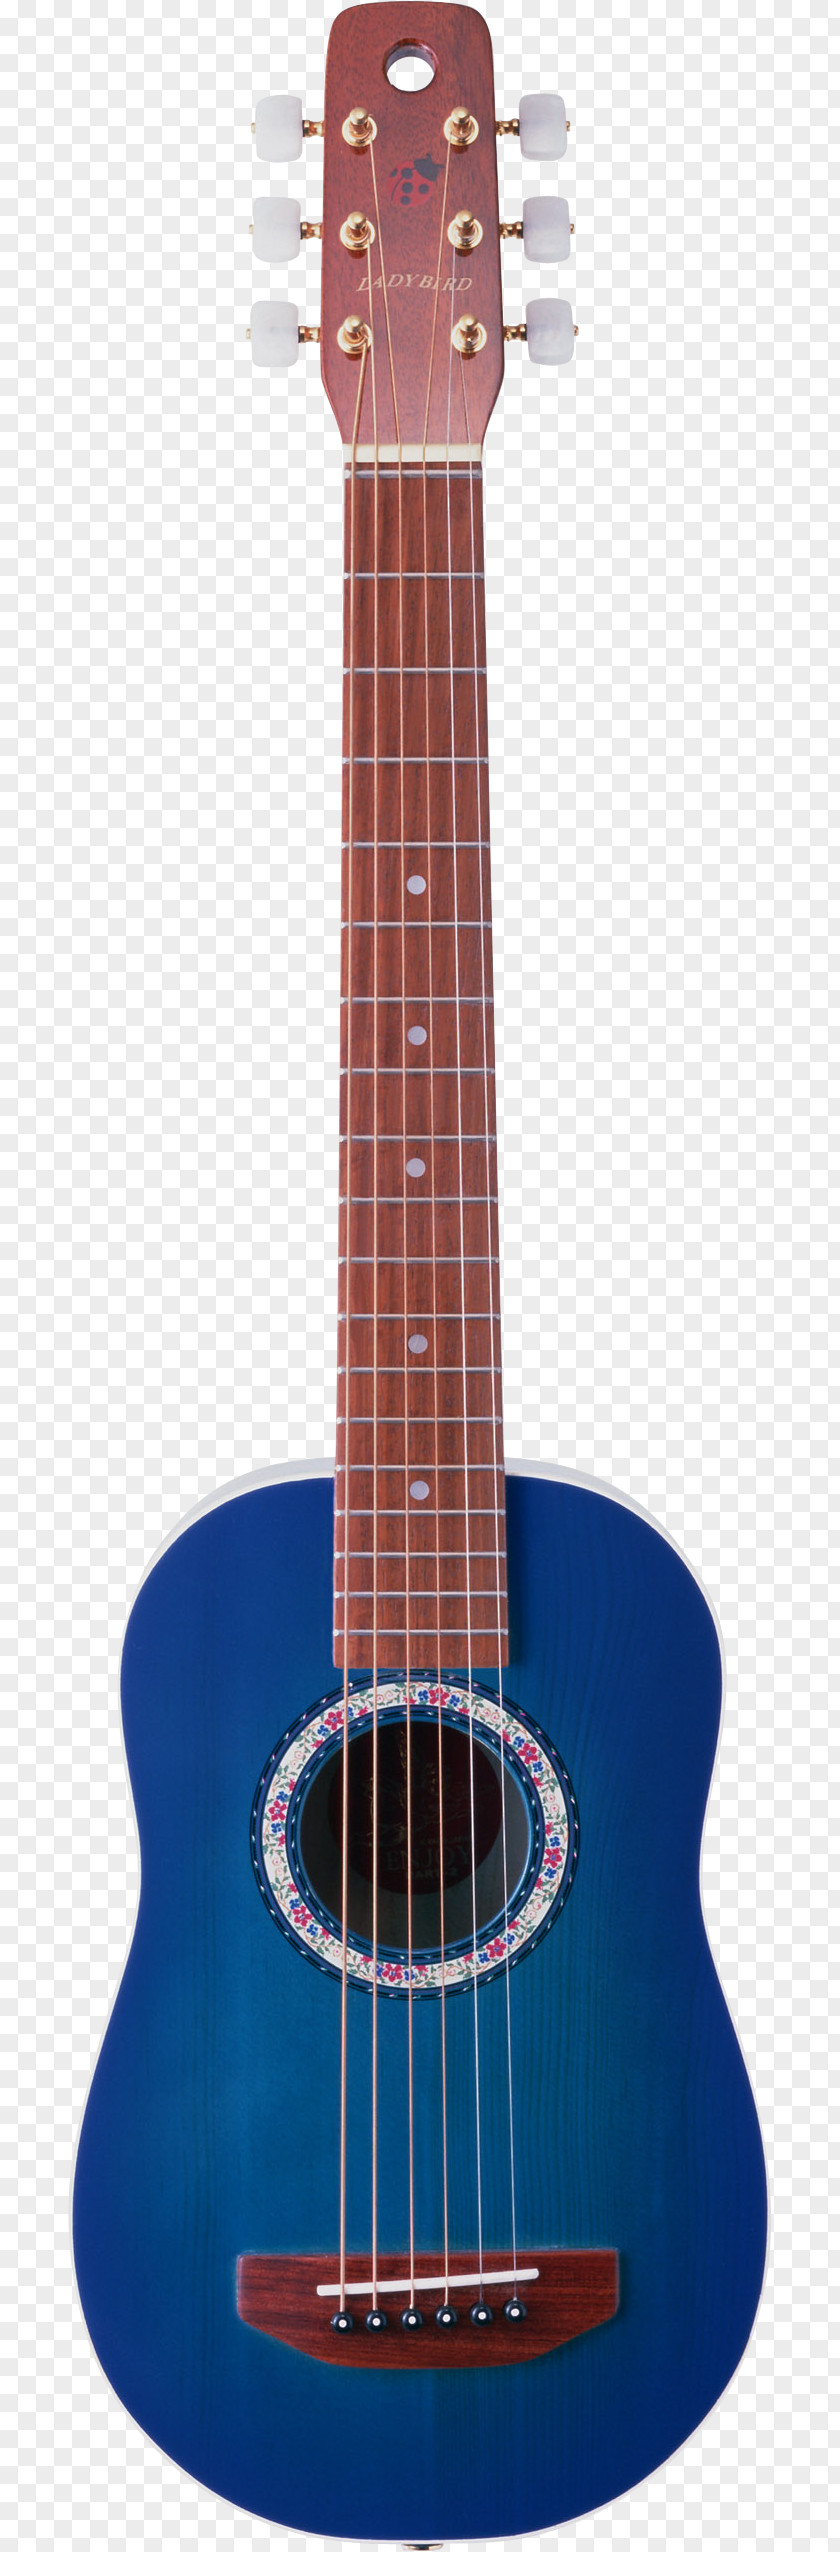 Guitar Image Musical Instrument PNG